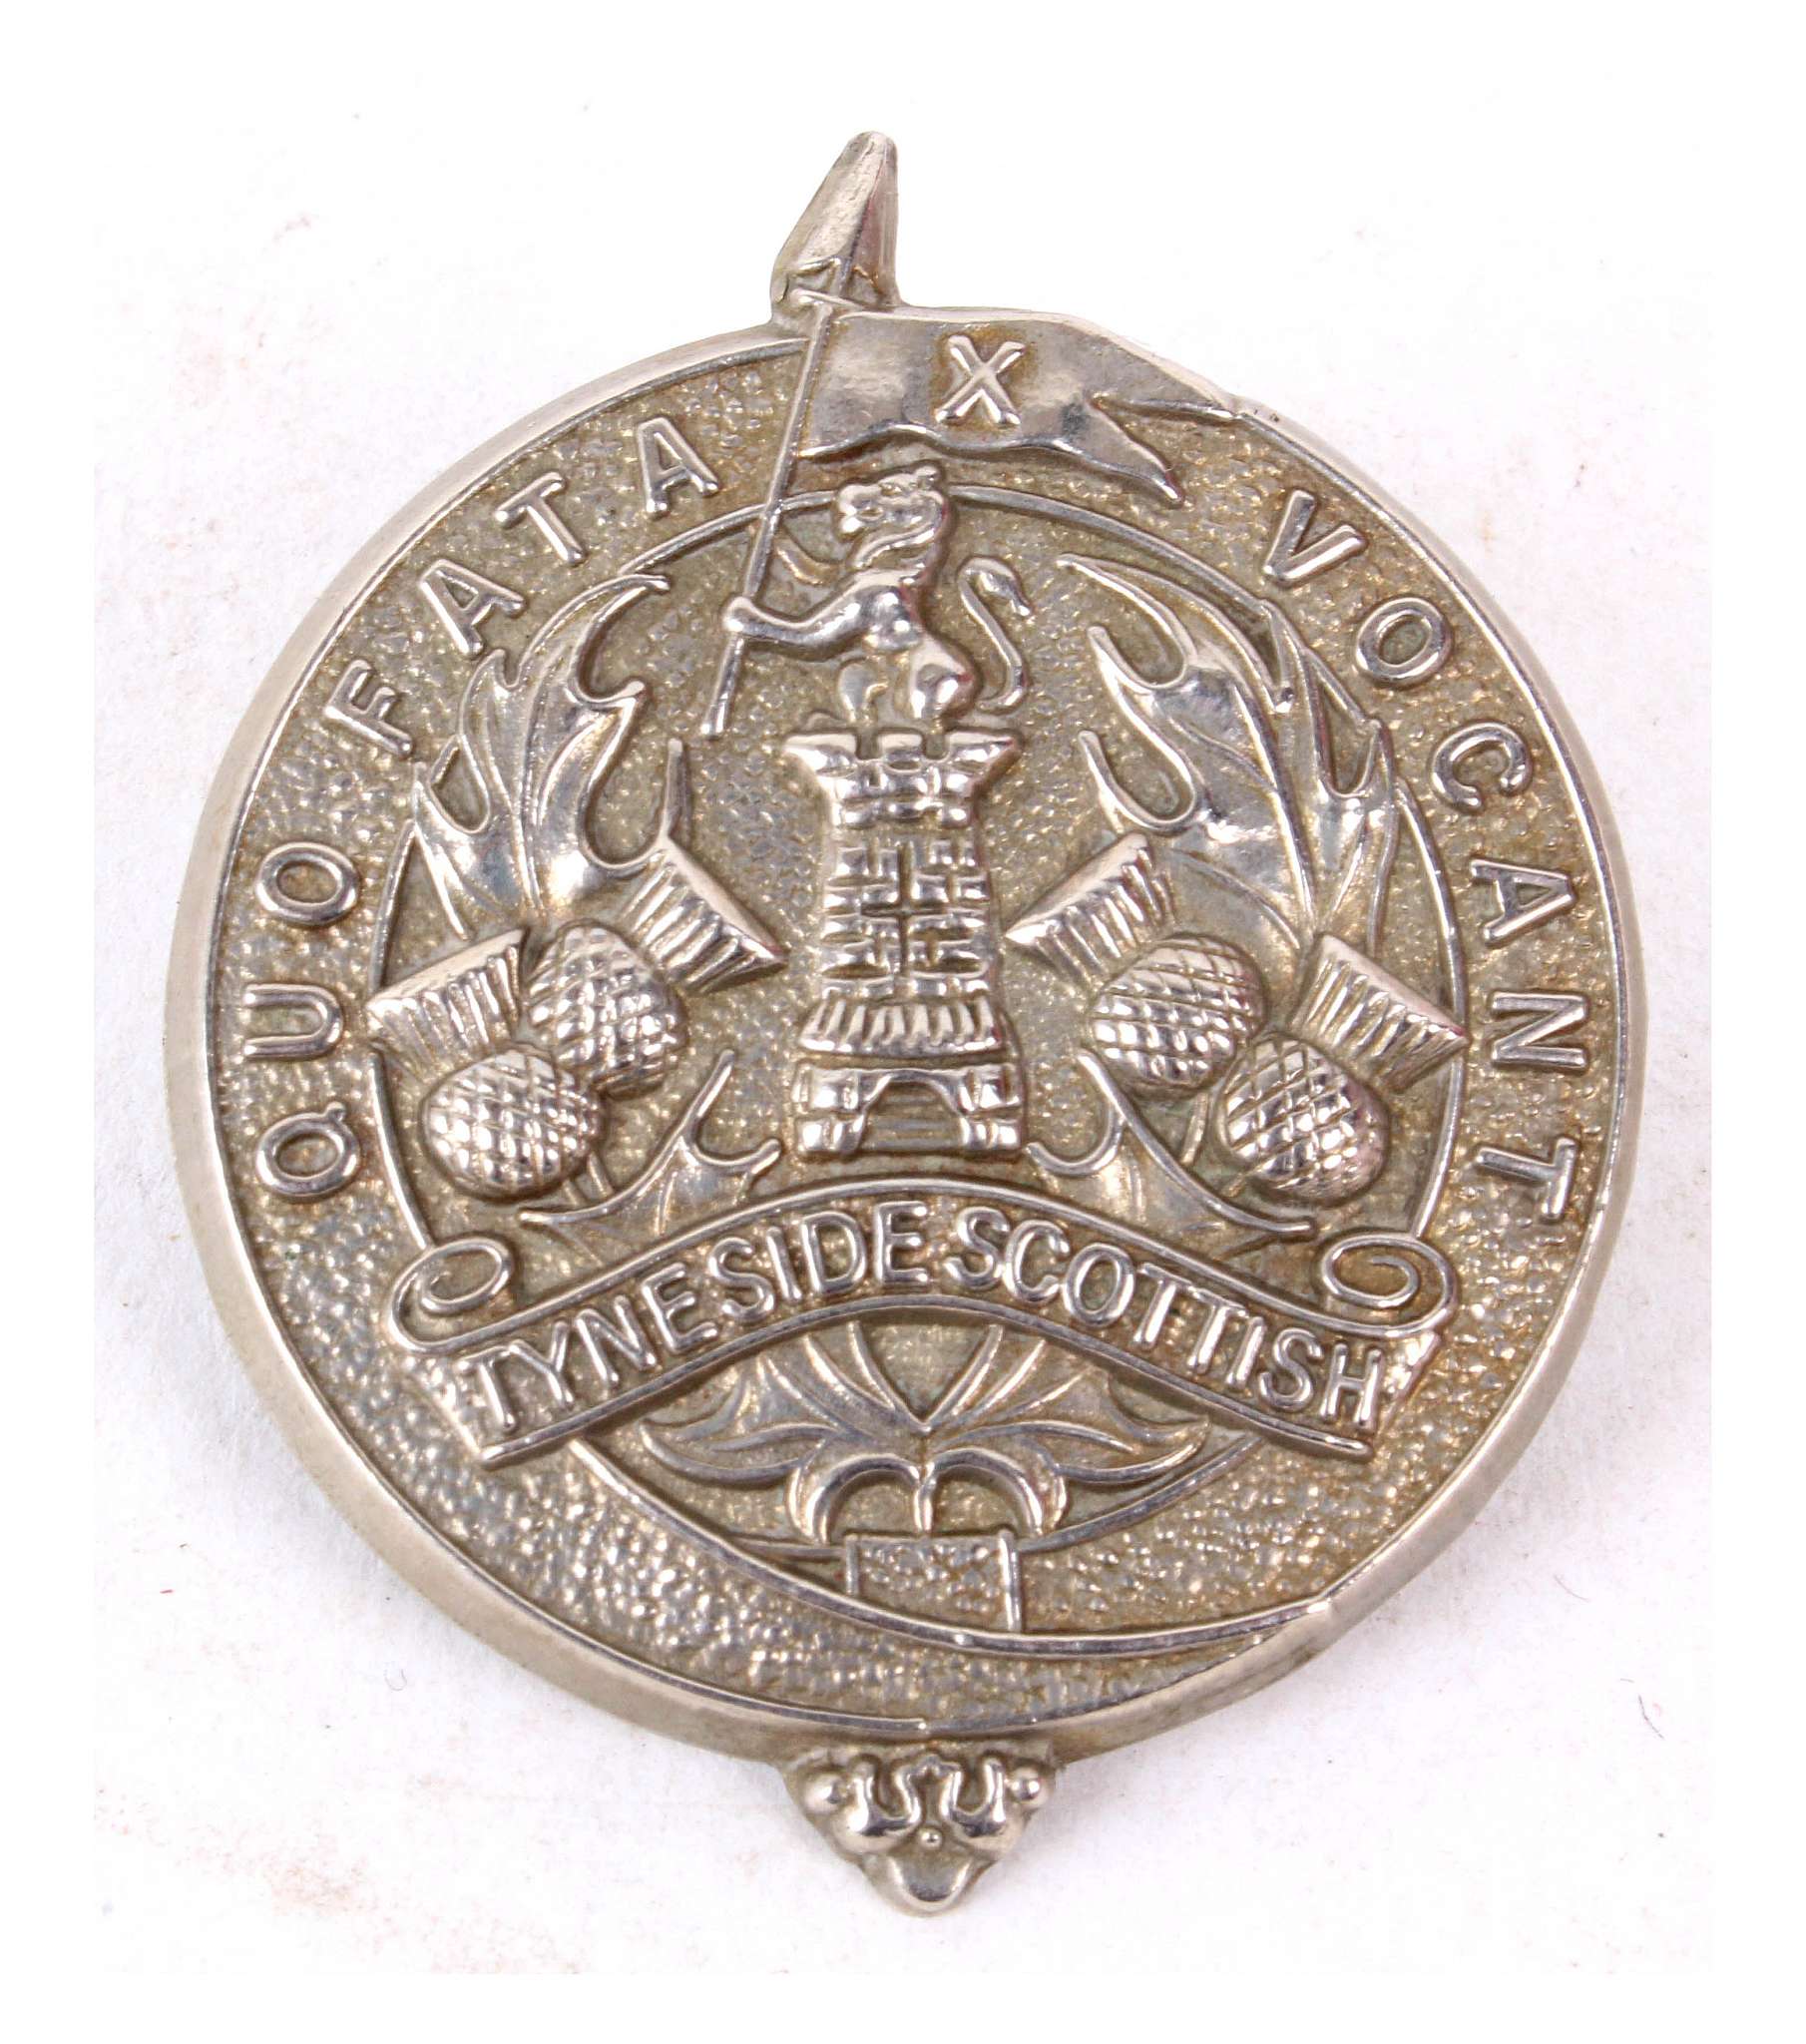 British Army military cap badges; Tyneside Scottish Glengarry badge also Infantry badges; 1958-69